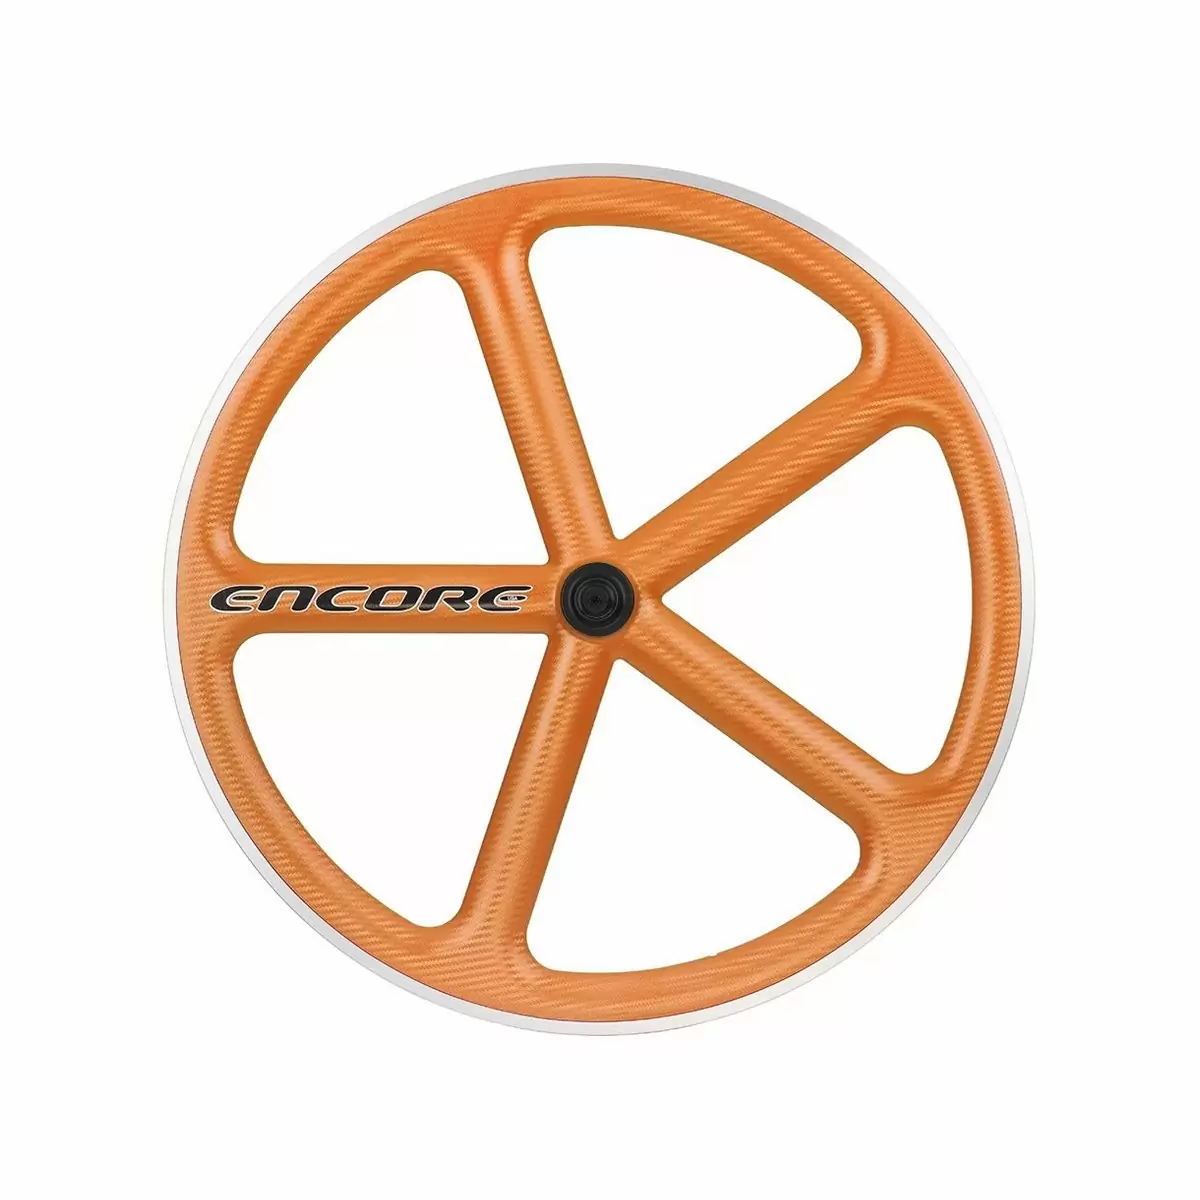 front wheel 700c track 5 spokes carbon weave orange msw - image